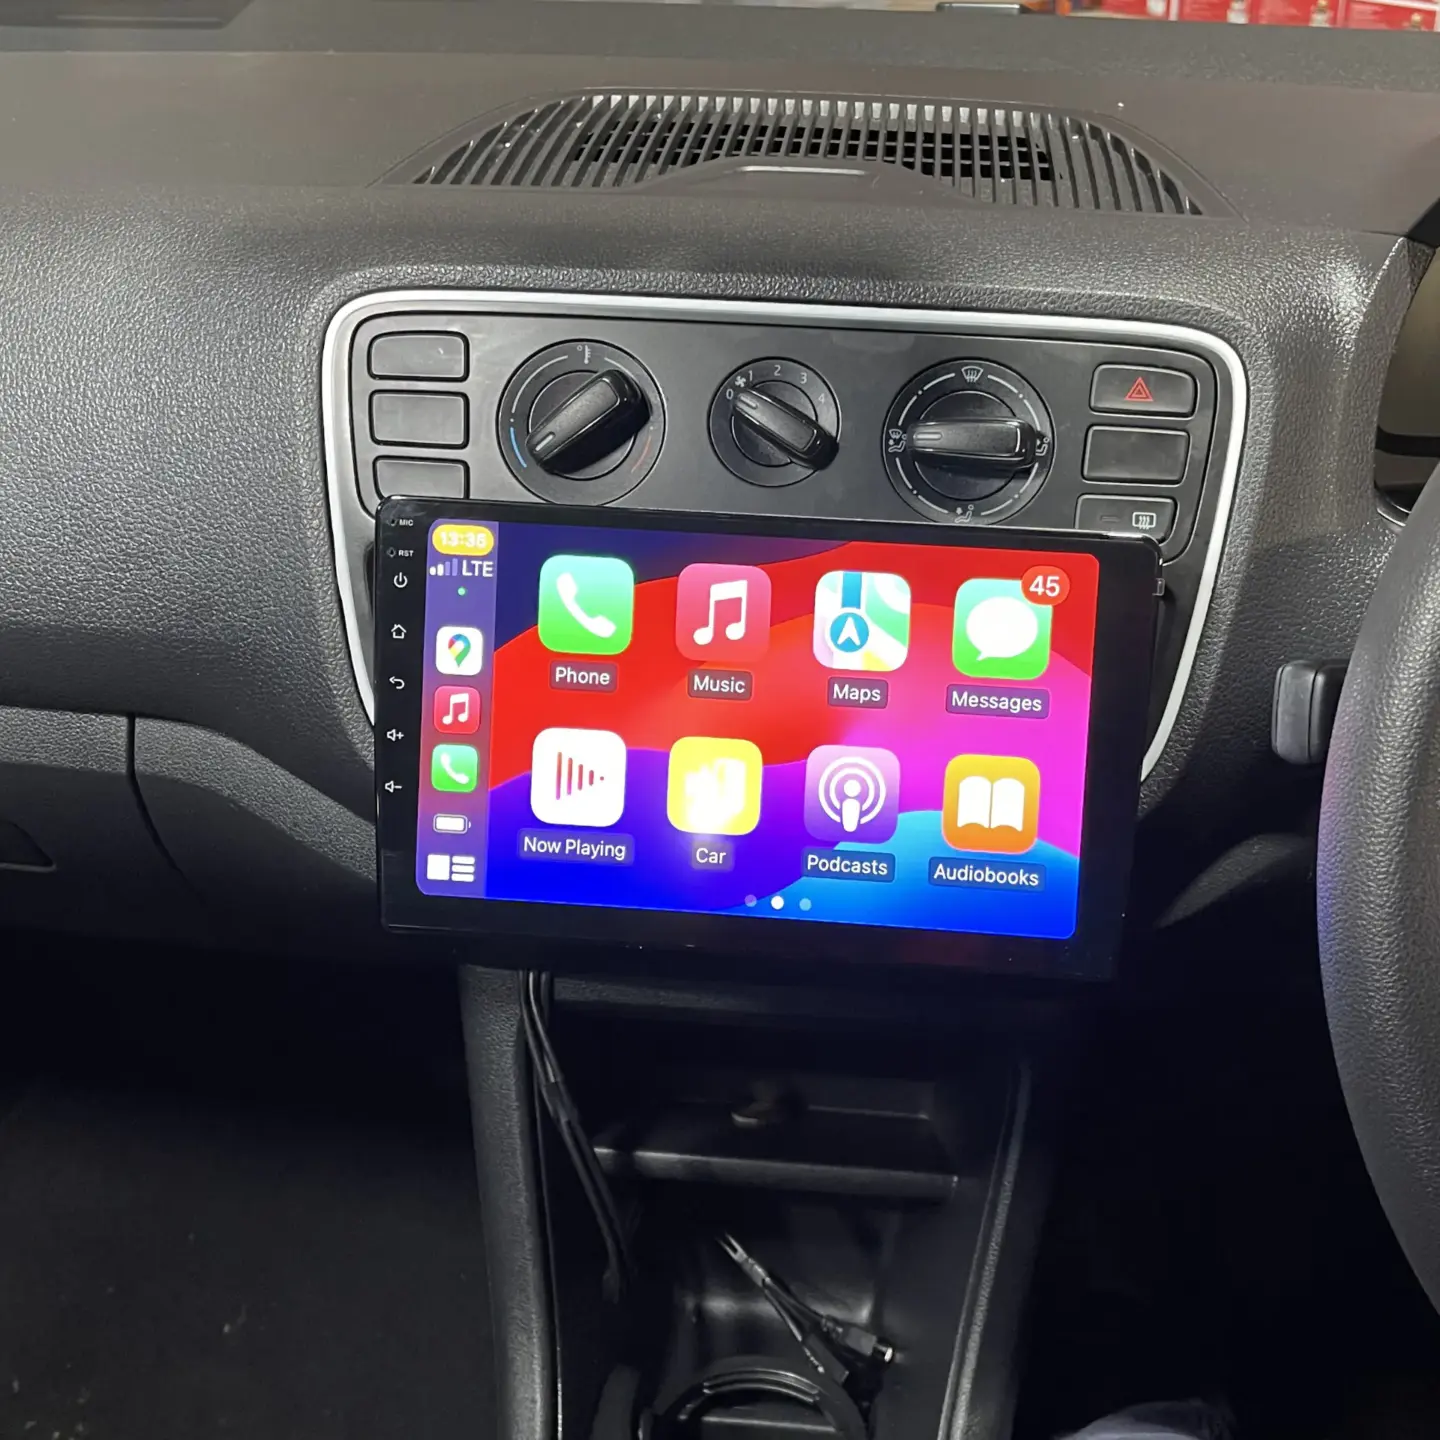 0011.jpg scaled - Radio King Ireland - Android Car Radios and CarPlay Systems